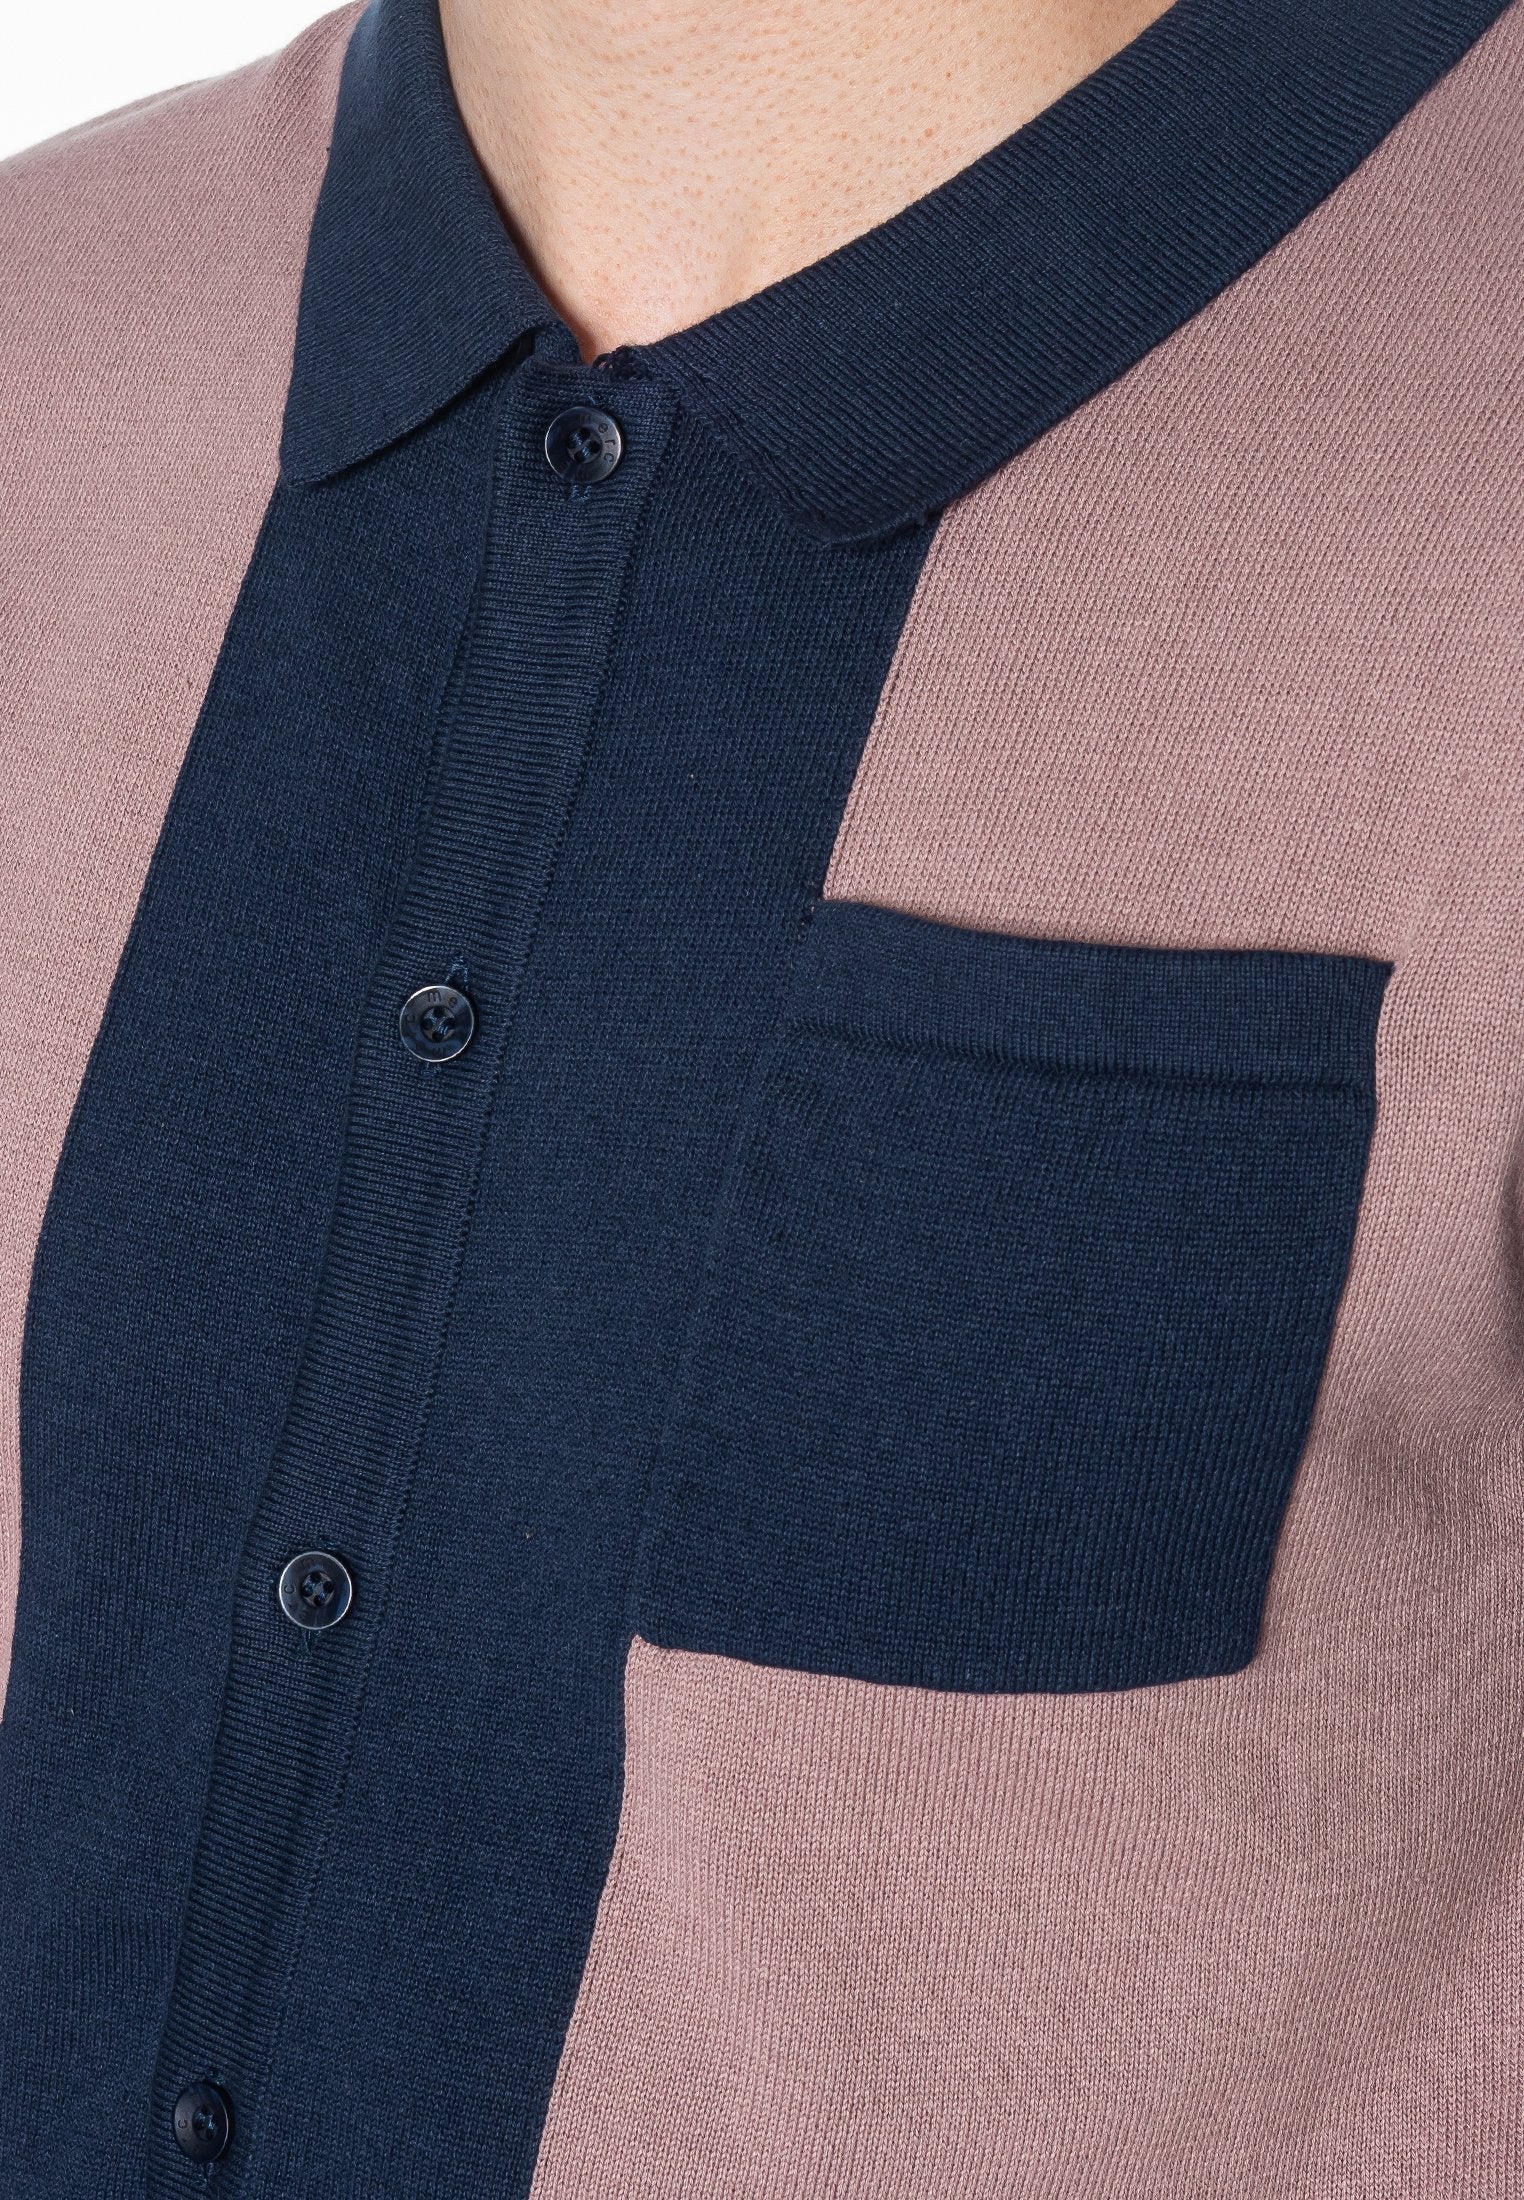 Conduit Knitted Polo Shirt - Merc London